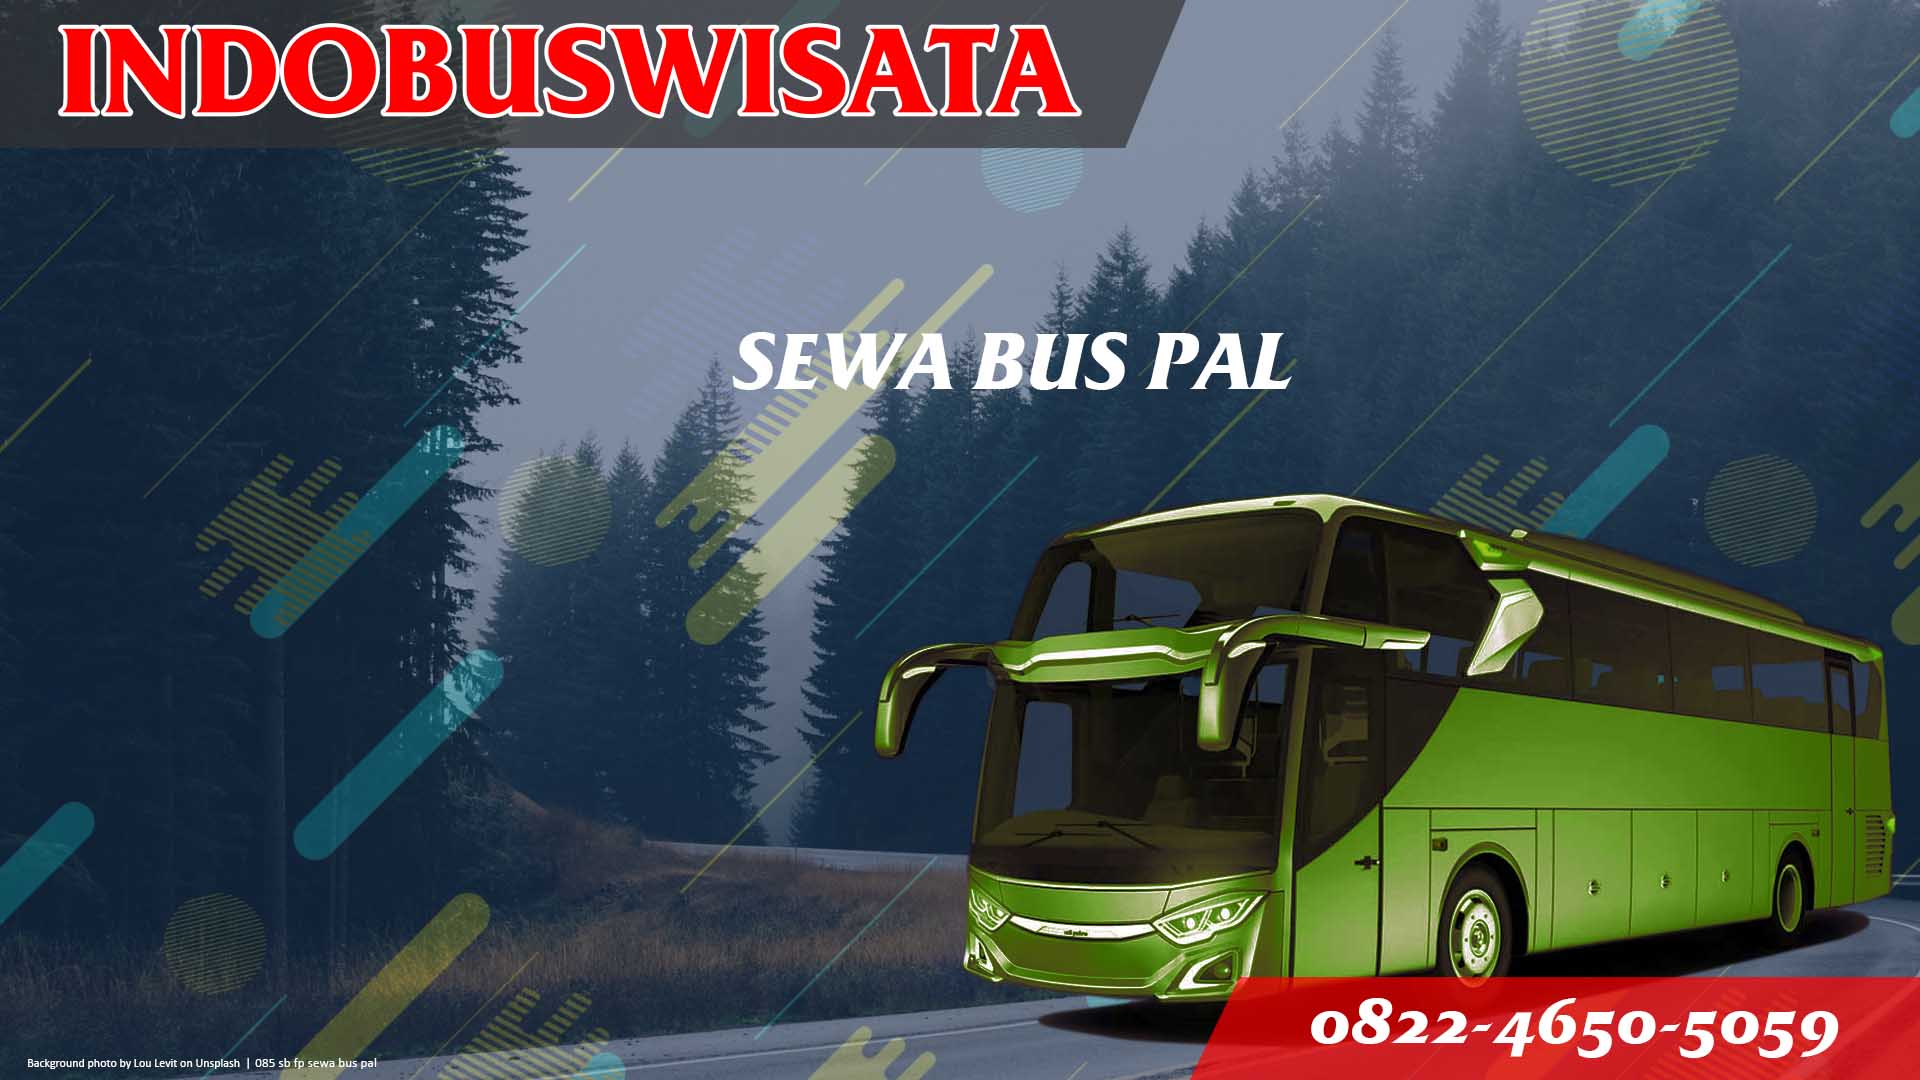 085 Sb Fp Sewa Bus Pal Jb 3 Hdd Indobuswisata